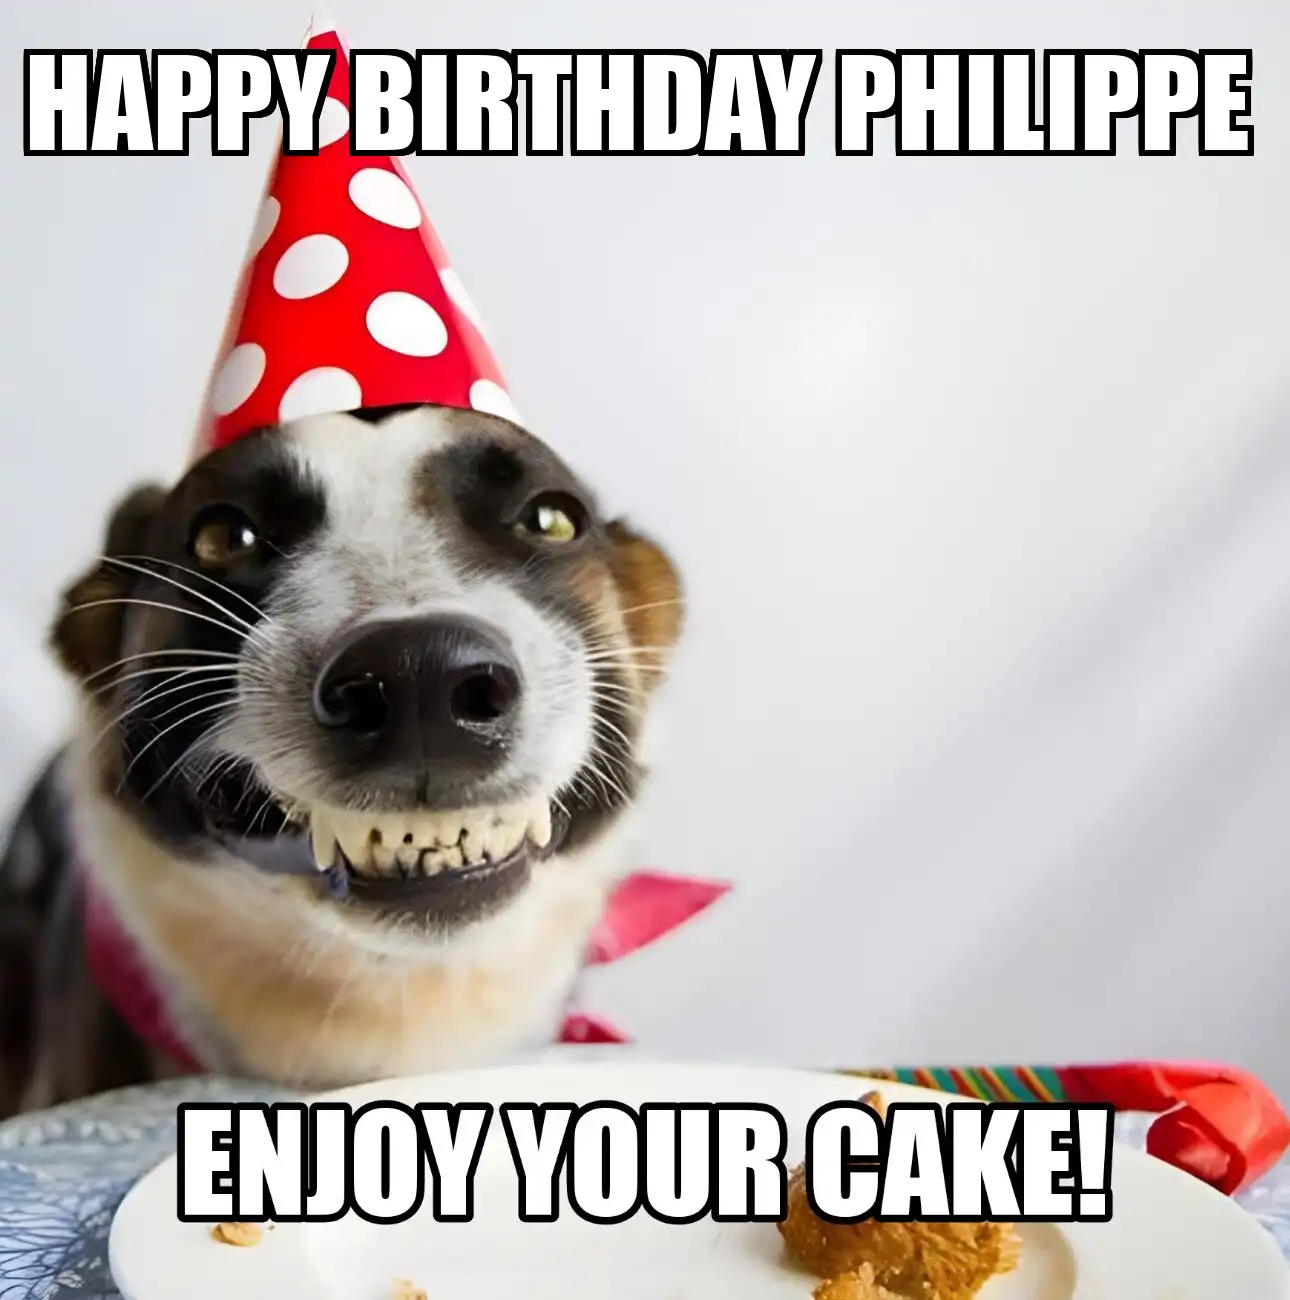 Happy Birthday Philippe Enjoy Your Cake Dog Meme